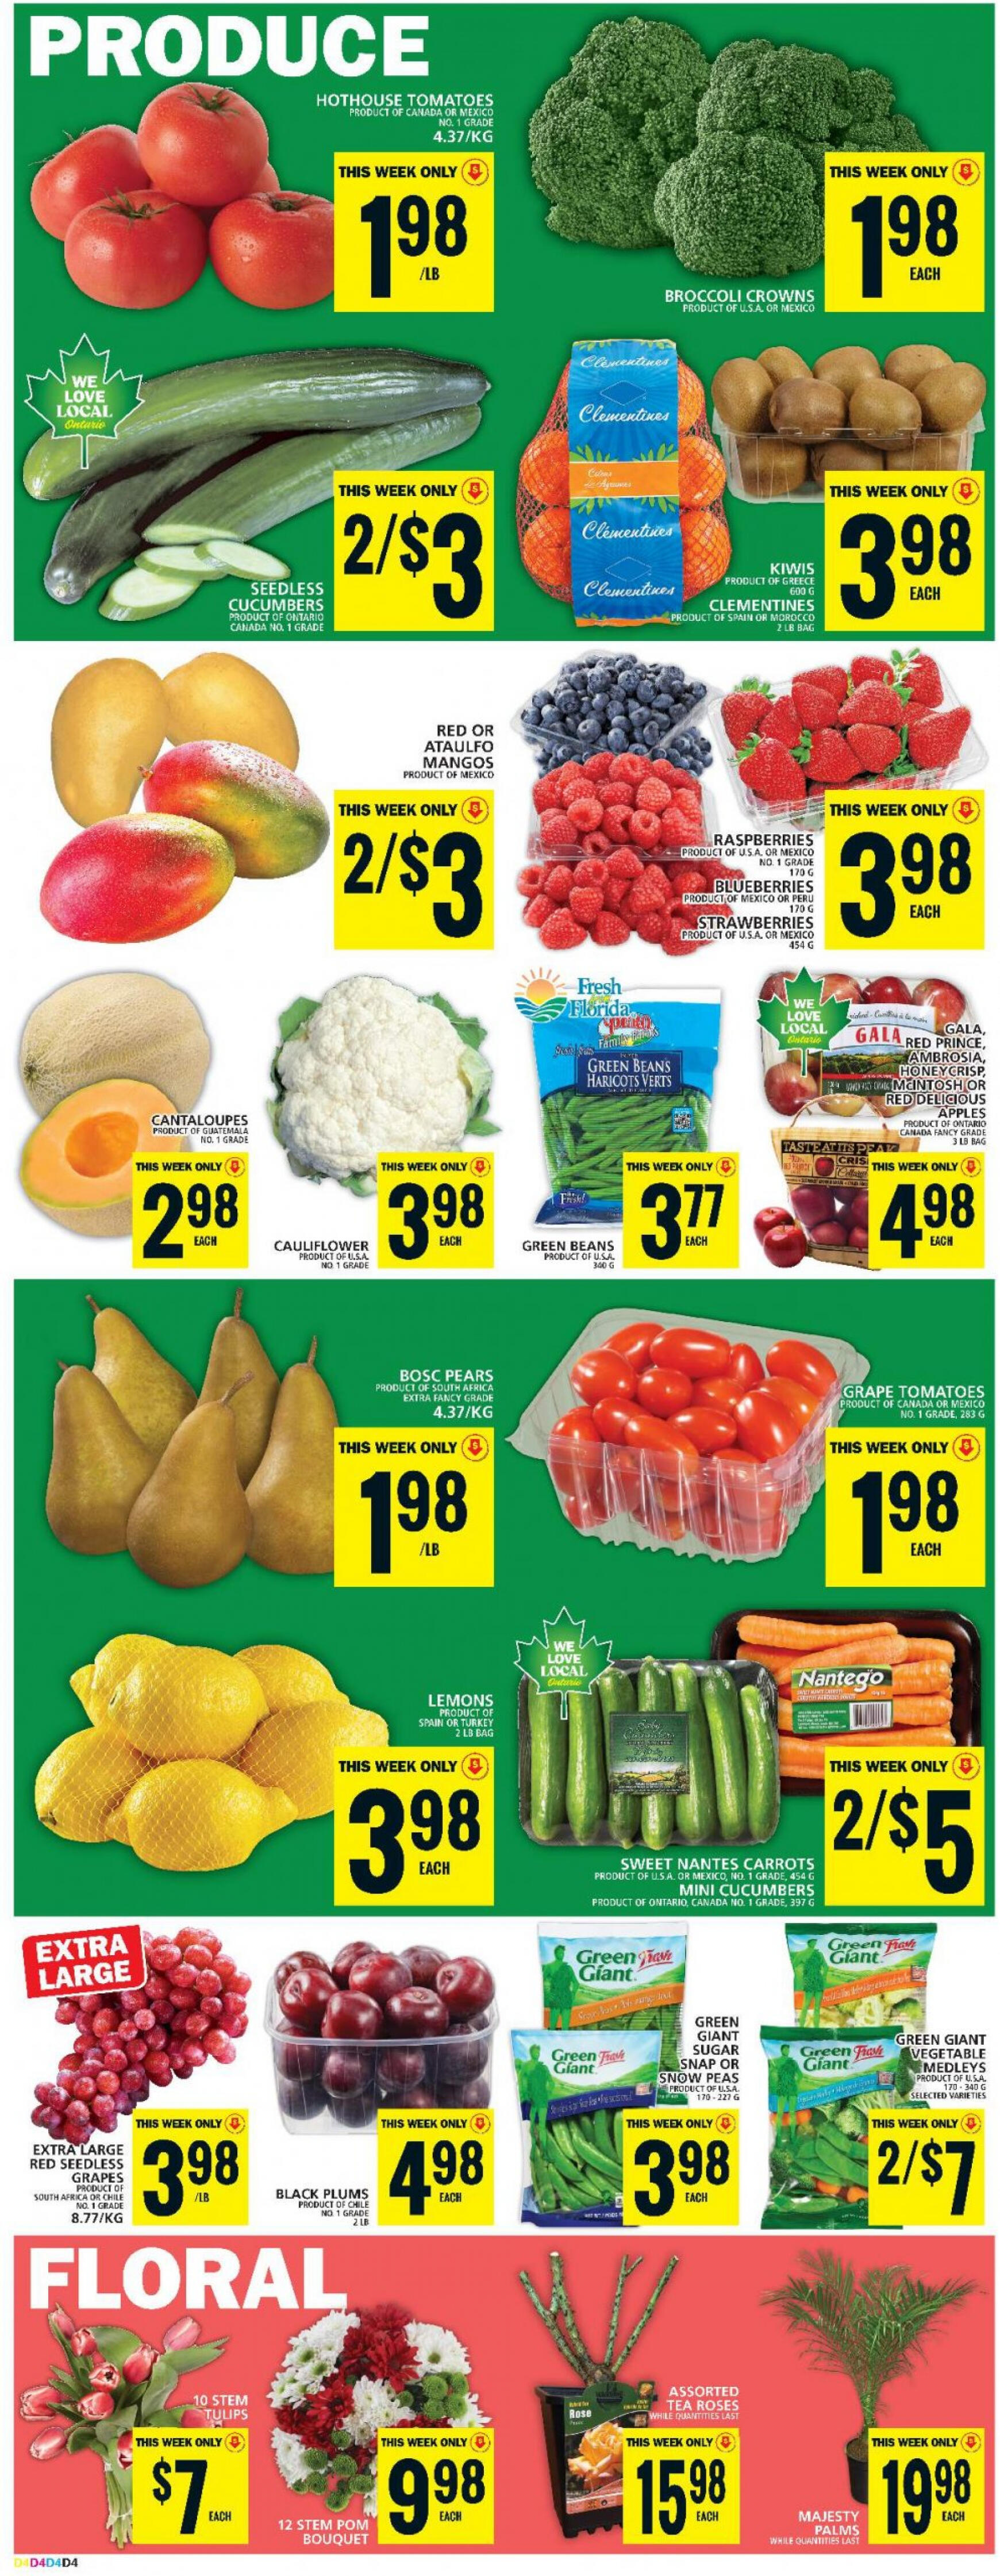 food-basics - Food Basics flyer current 25.04. - 01.05. - page: 8